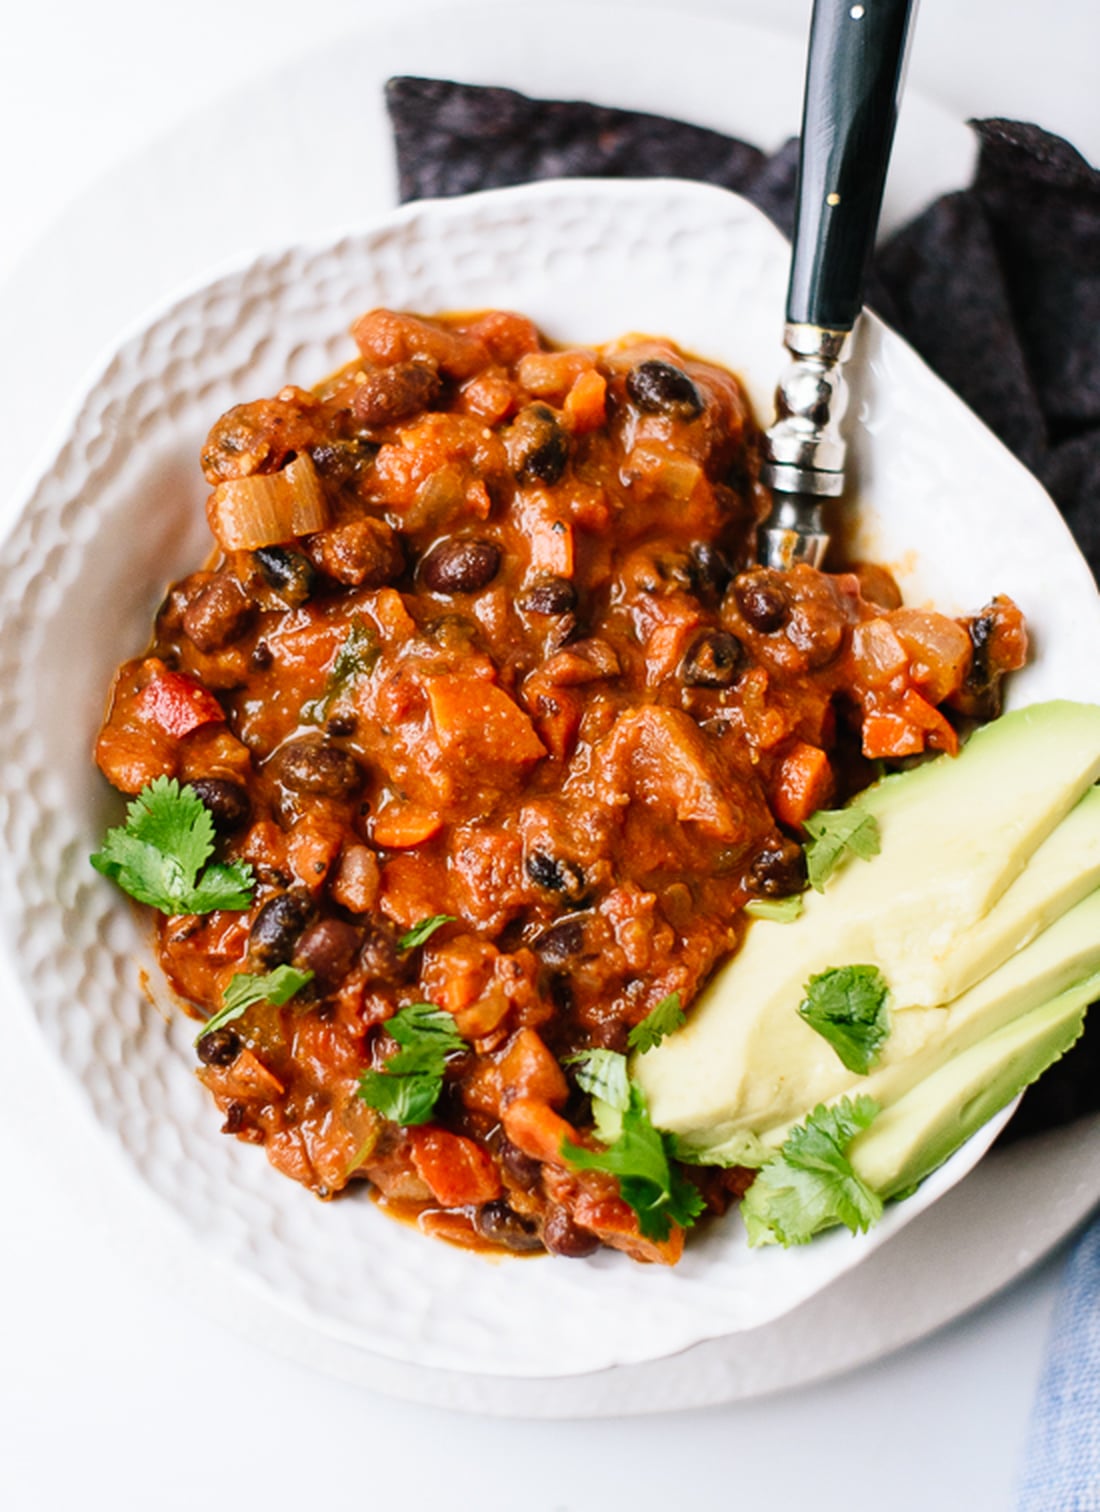 Healthy Chili Recipes — Paleo to Vegan | POPSUGAR Fitness